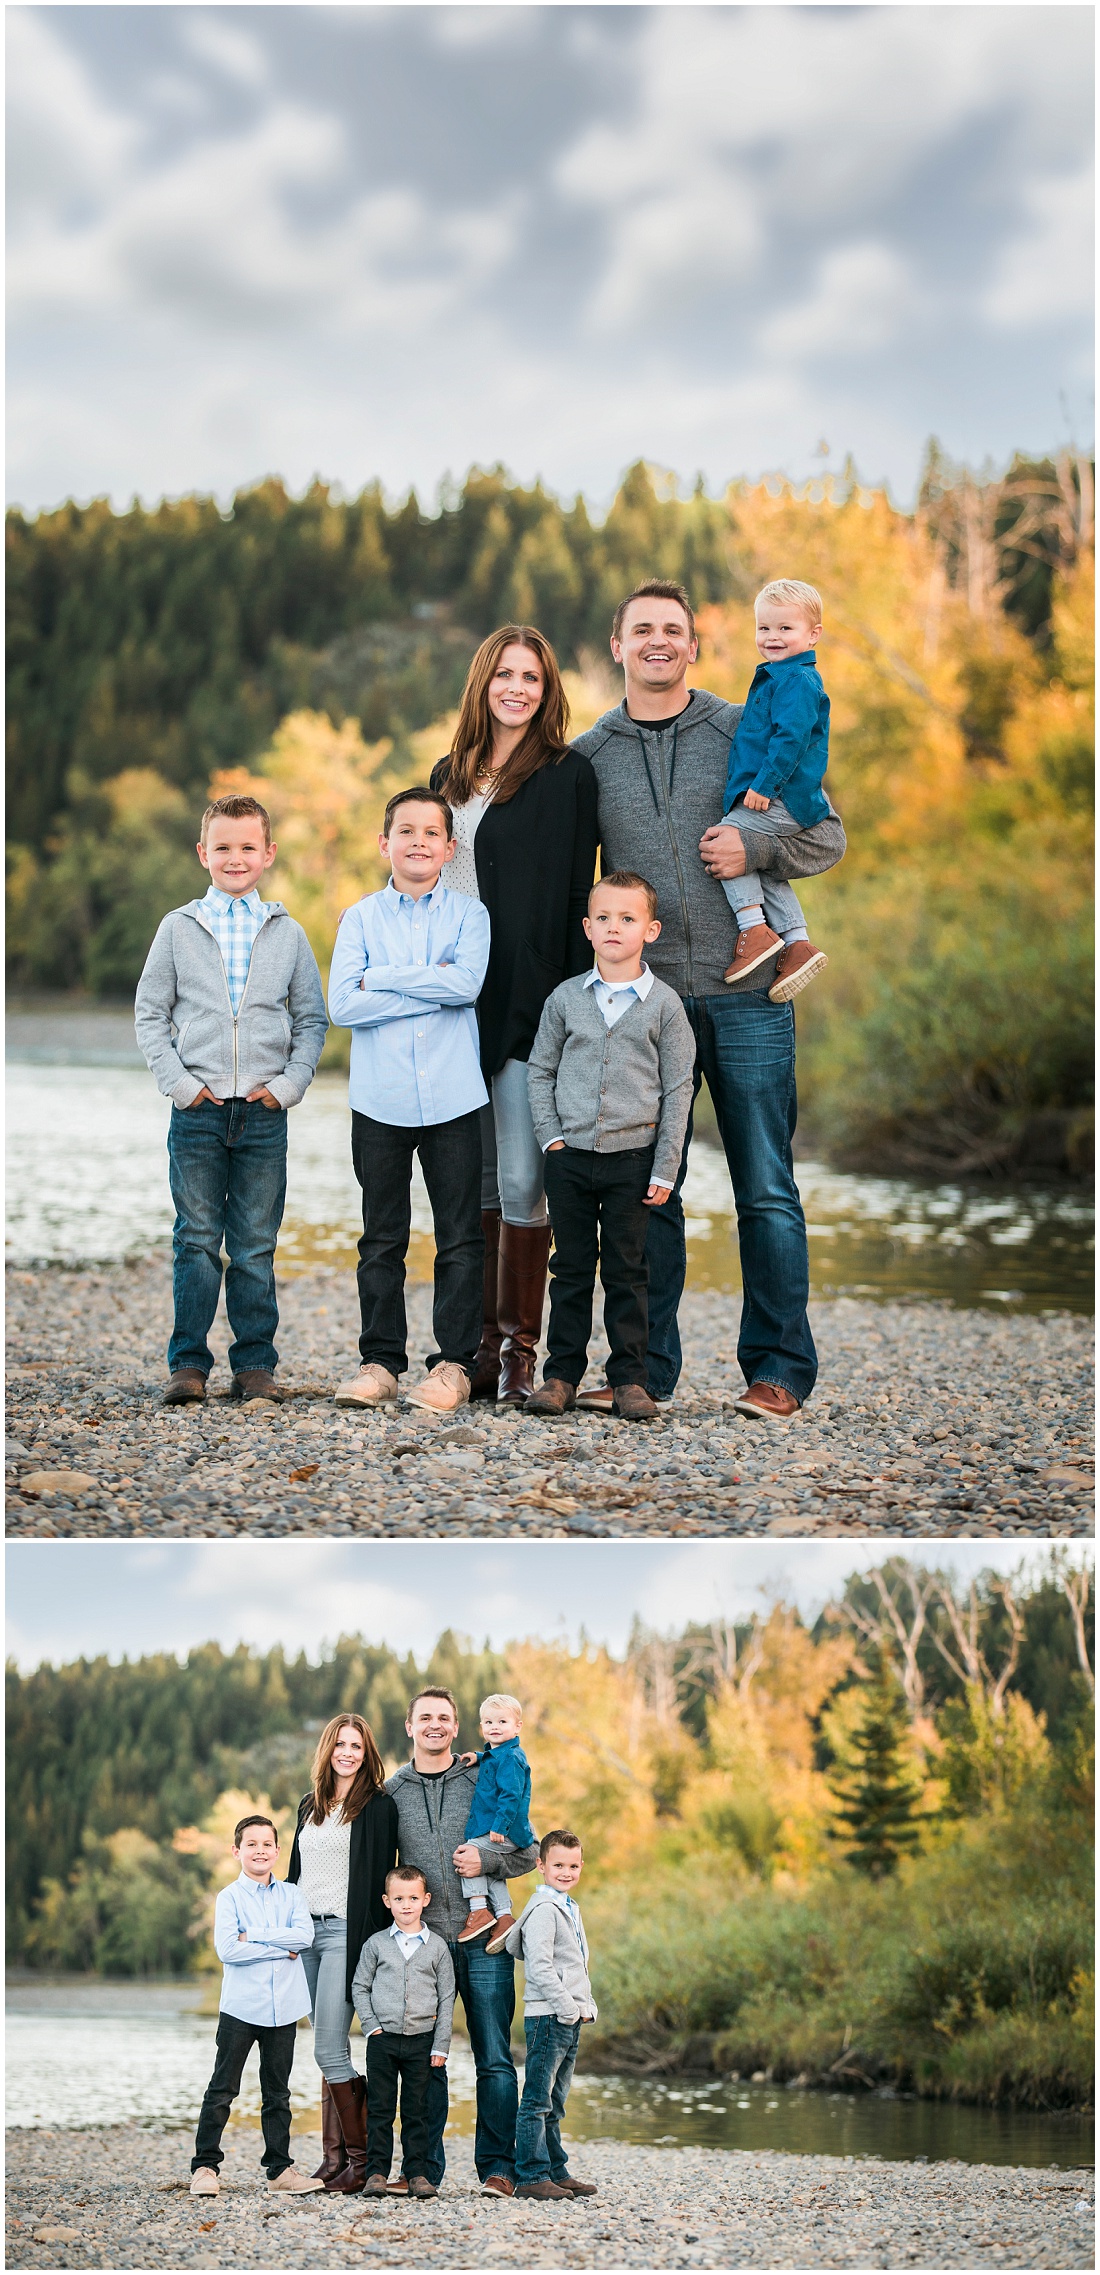 grey and blue outfits for family of 4 boys | Alysha Sladek Photography